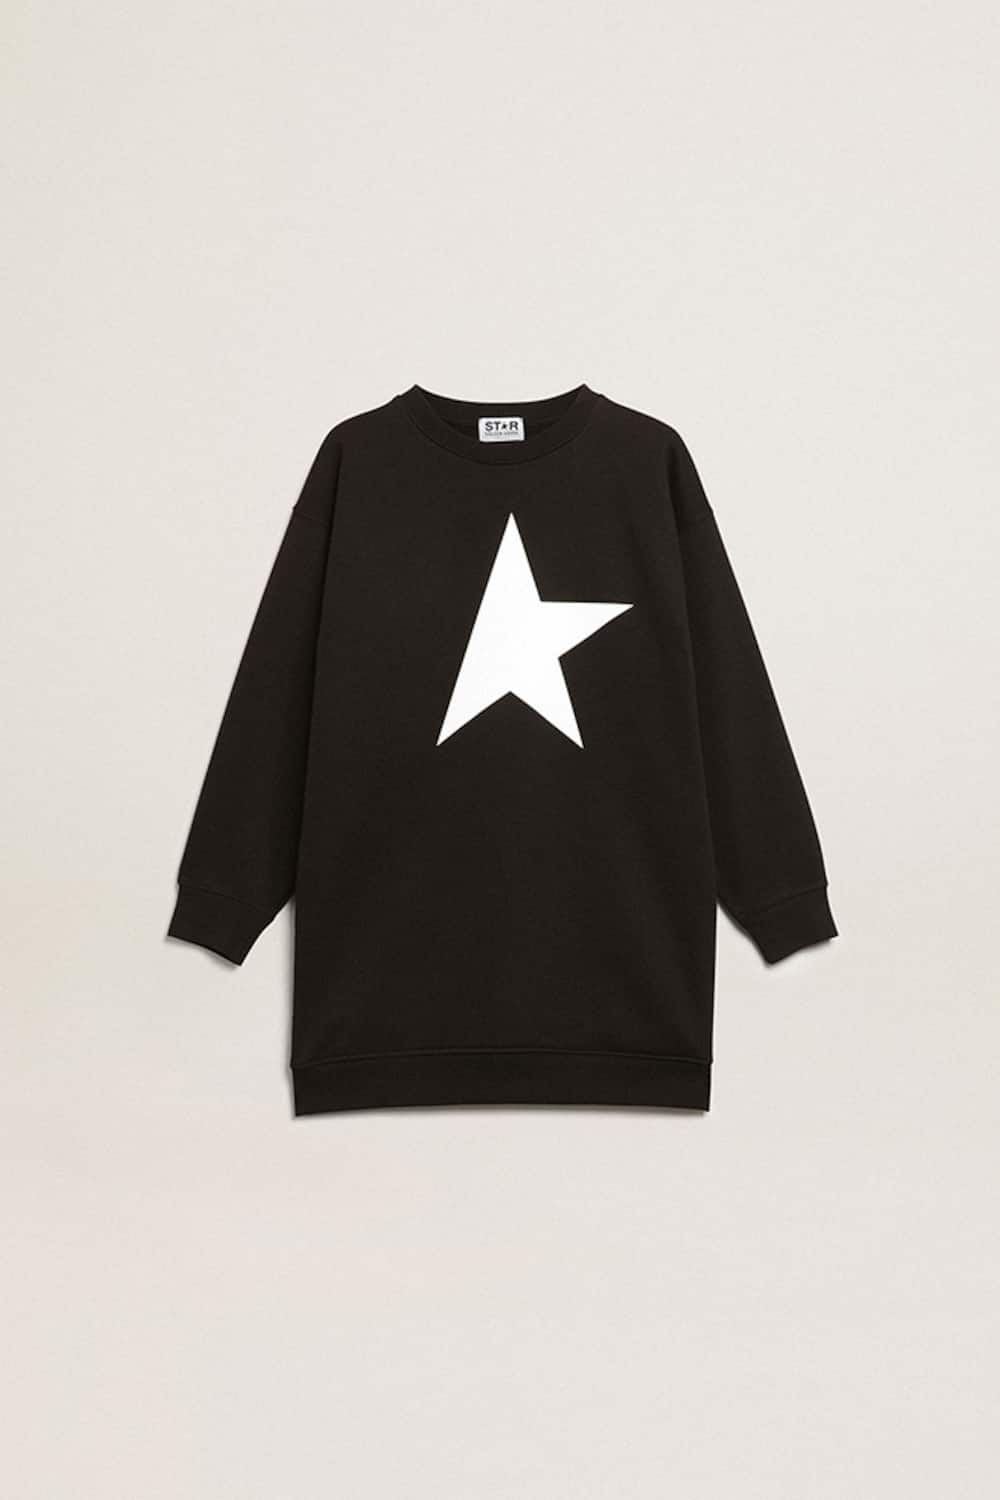 Golden Goose - Girls’ black sweatshirt dress with white star in 